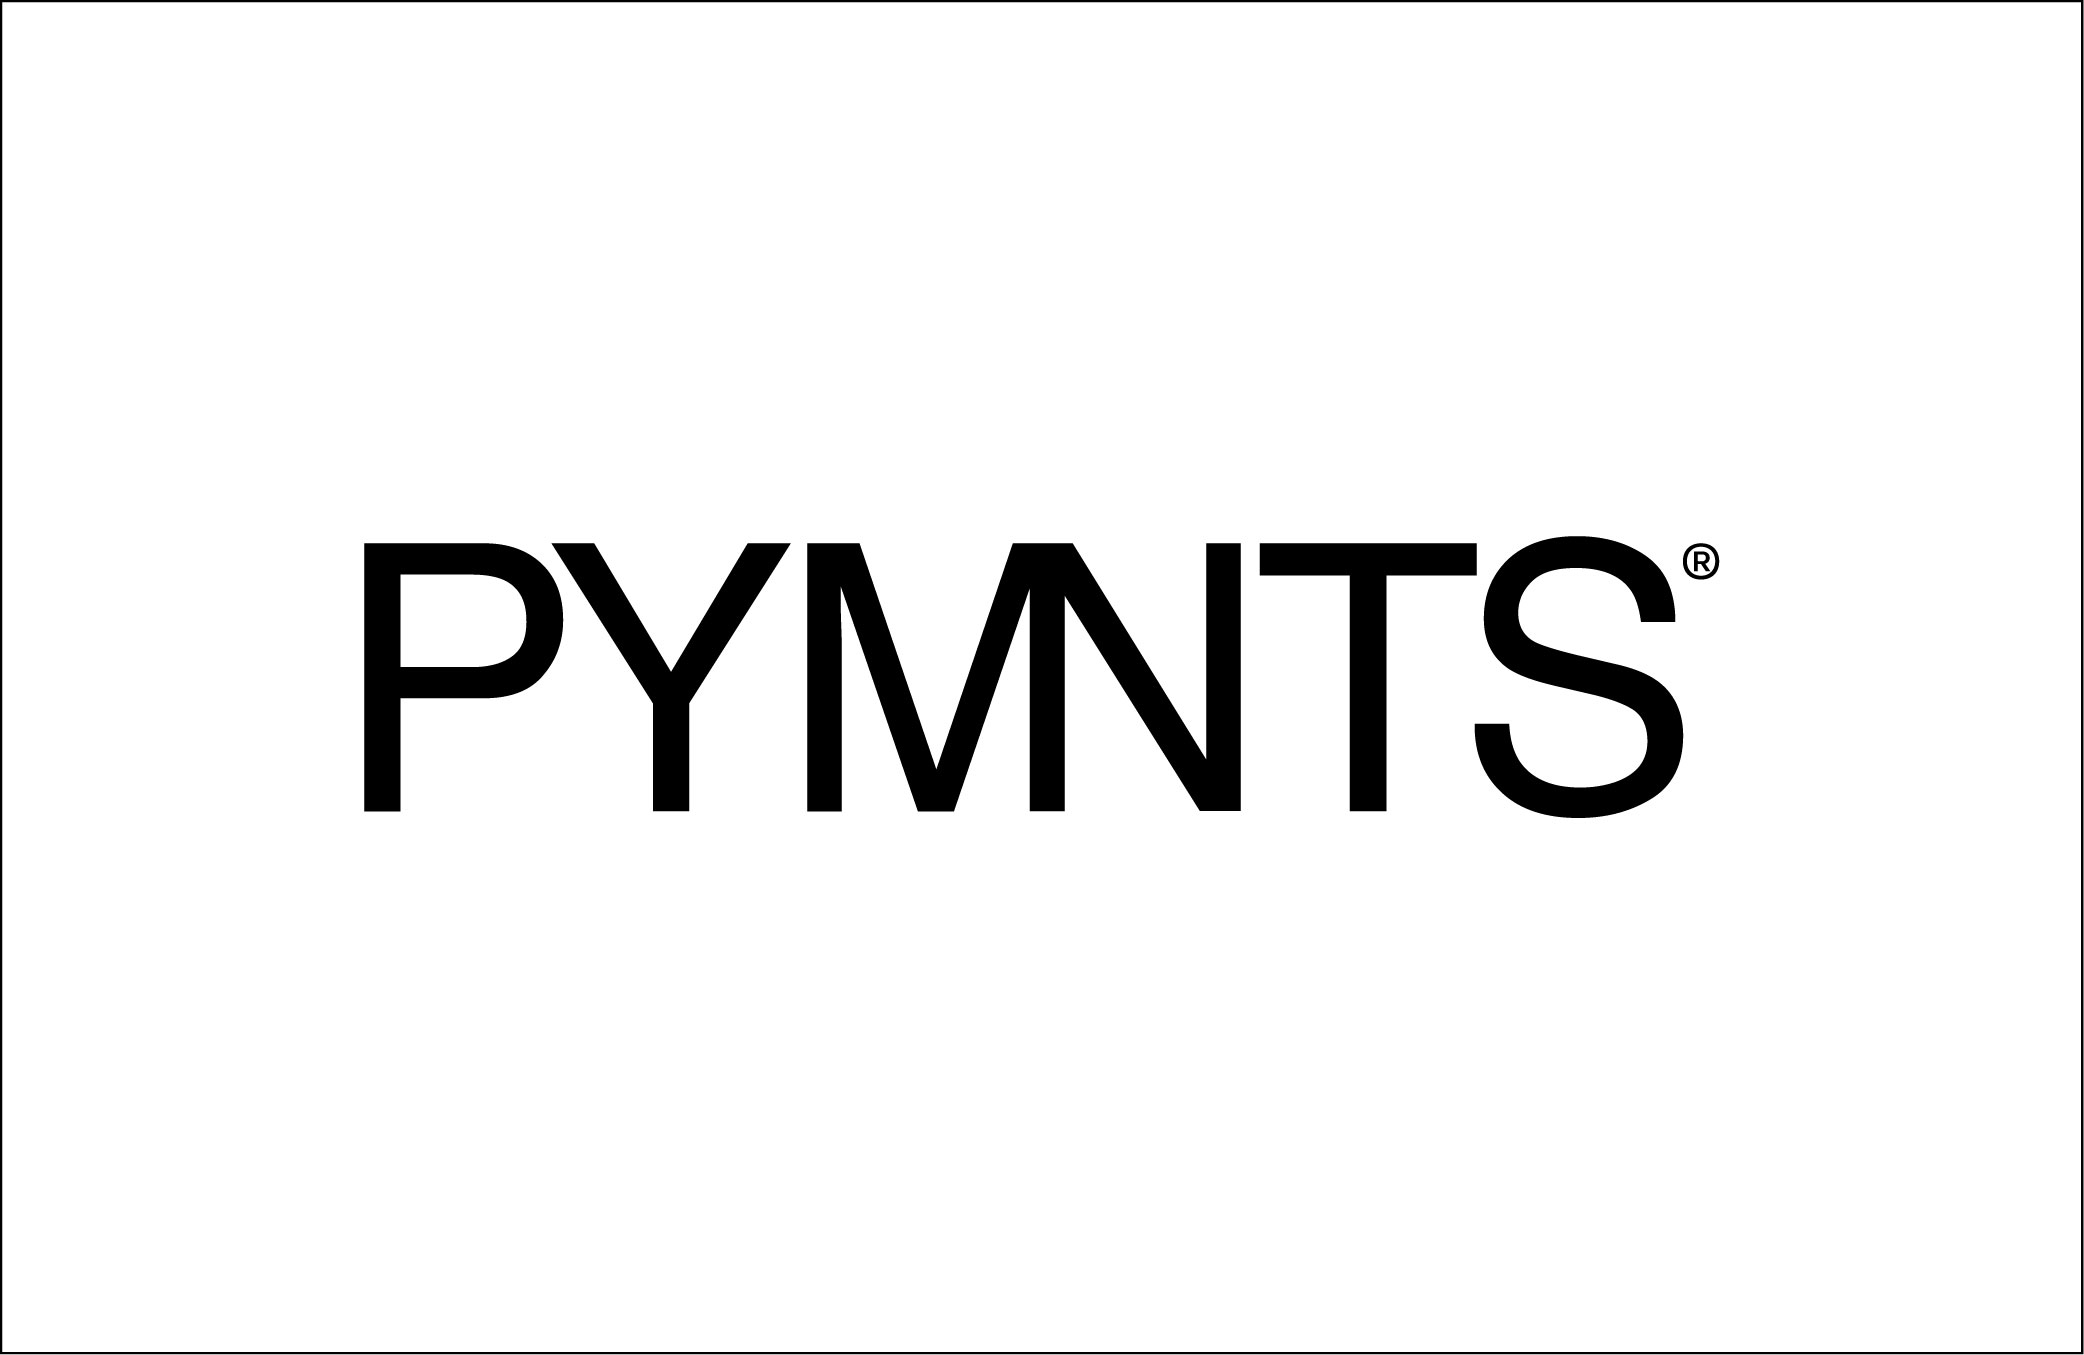 Press post image of PYMNTS logo